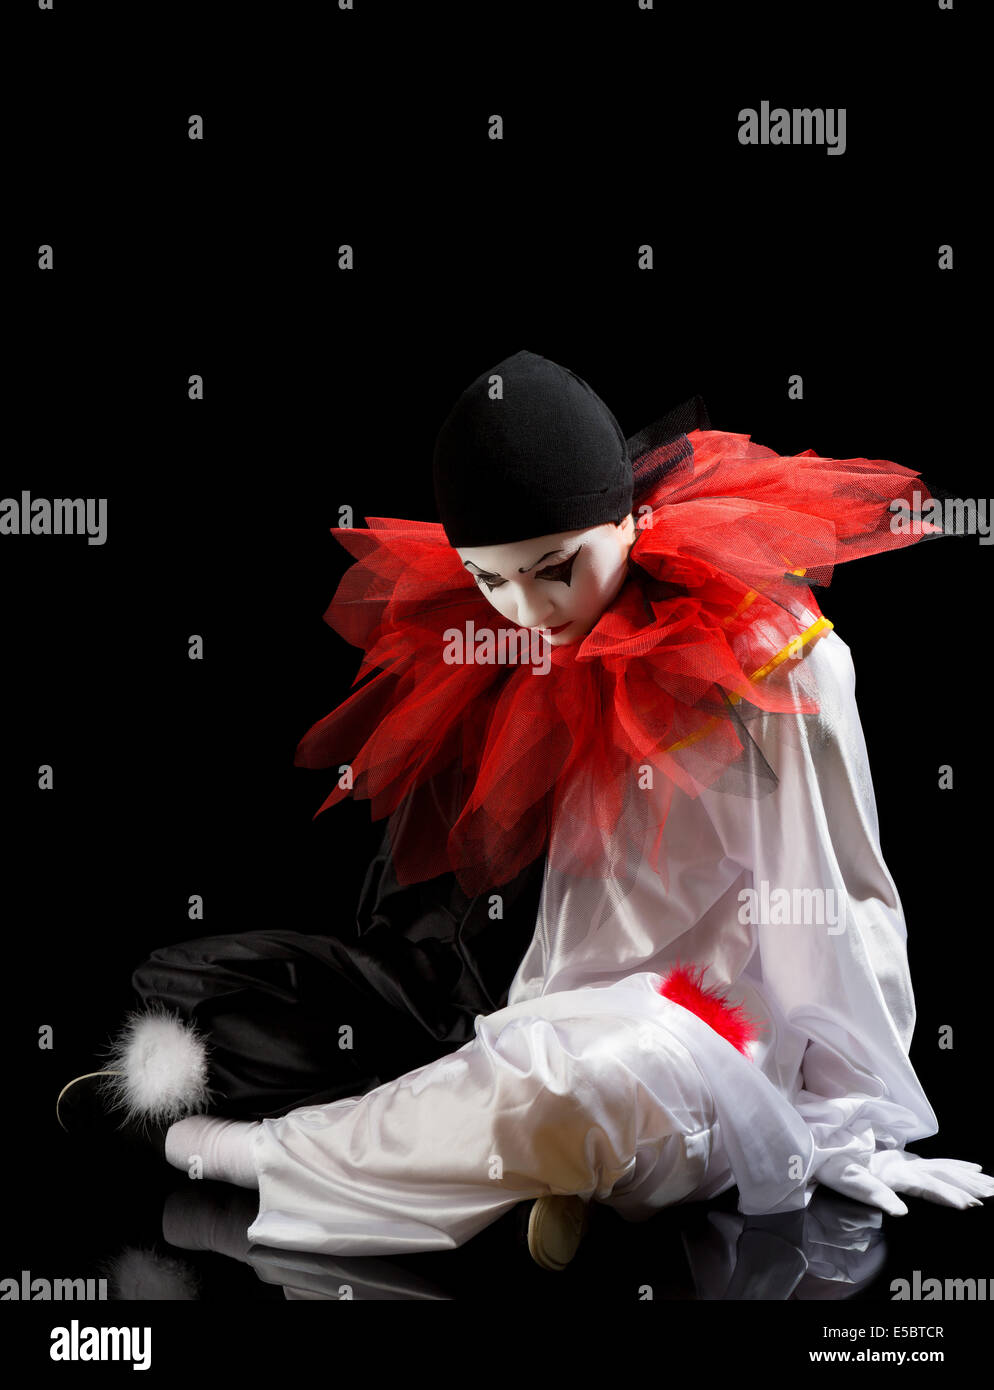 Sad Clown or Pierrot sitting on the black floor Stock Photo